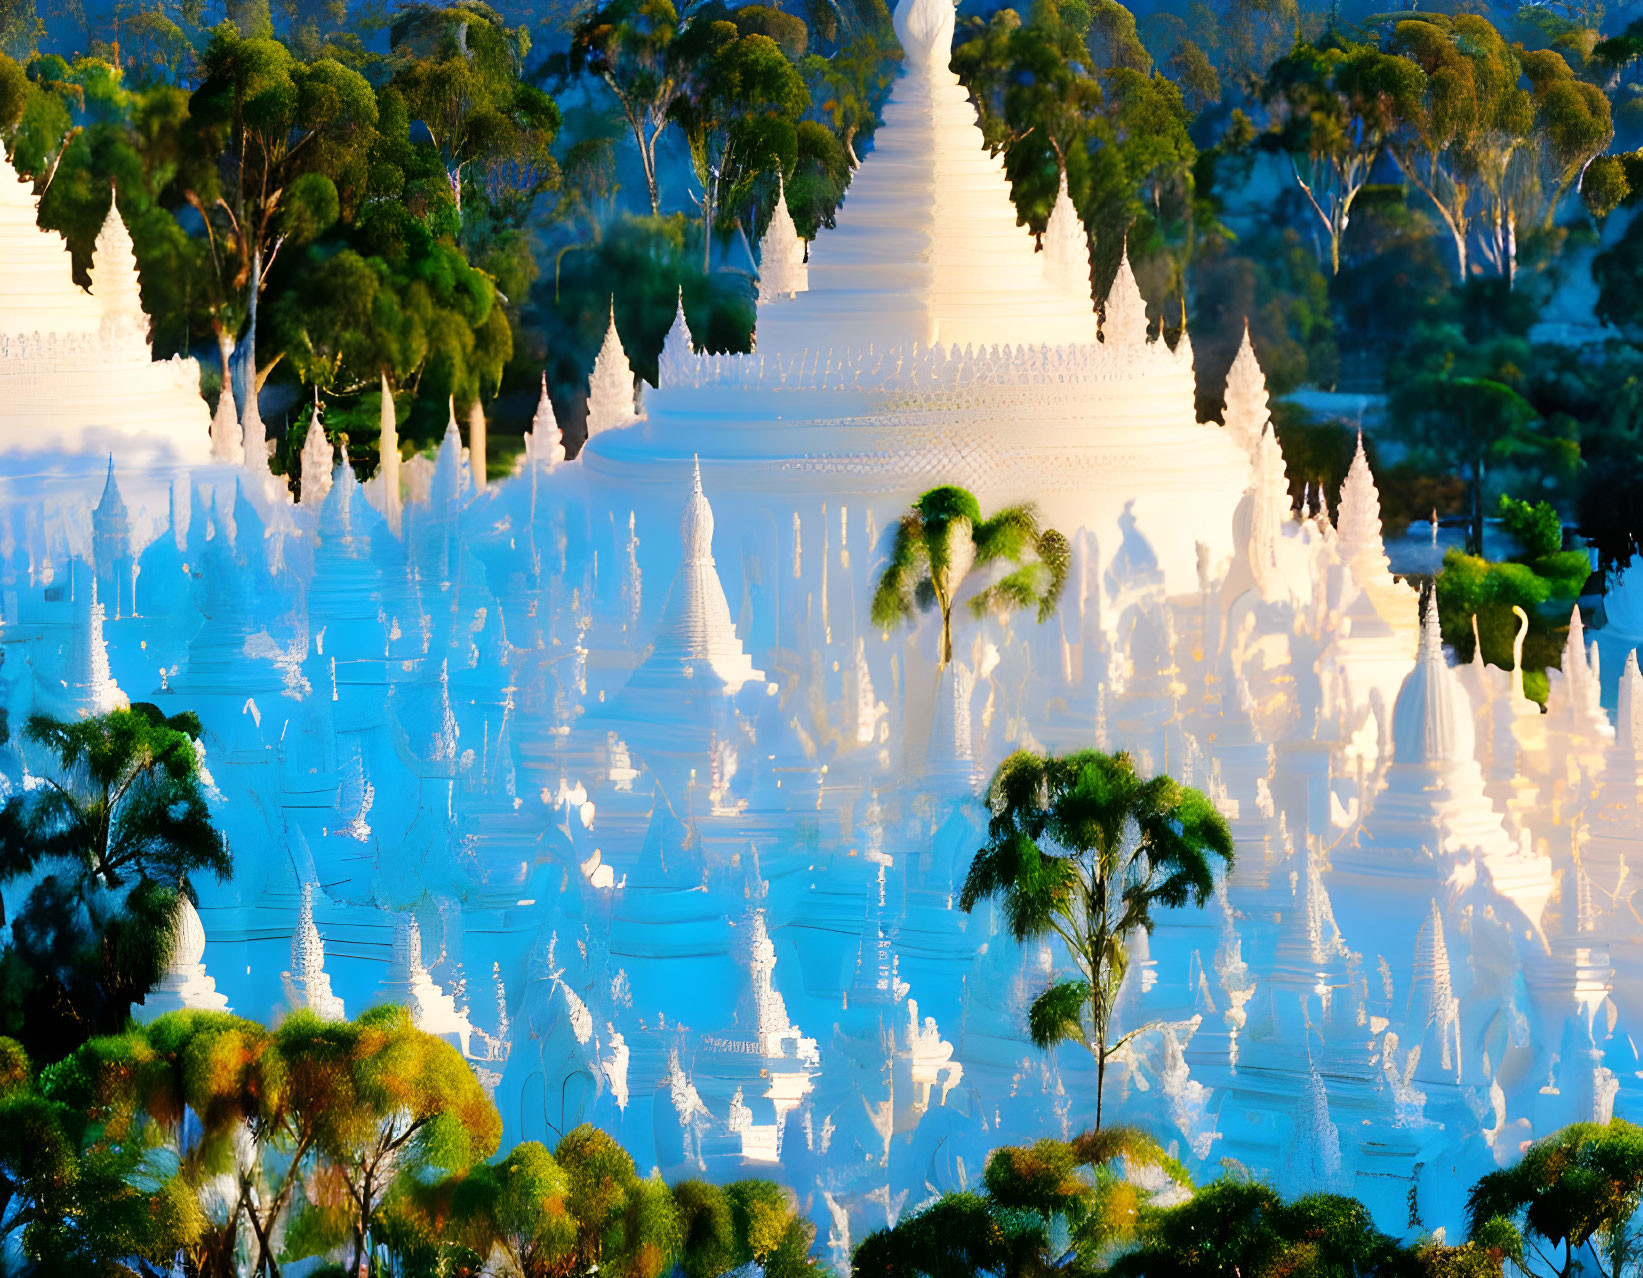 Hindu temple in hilly Australian eucalyptus forest